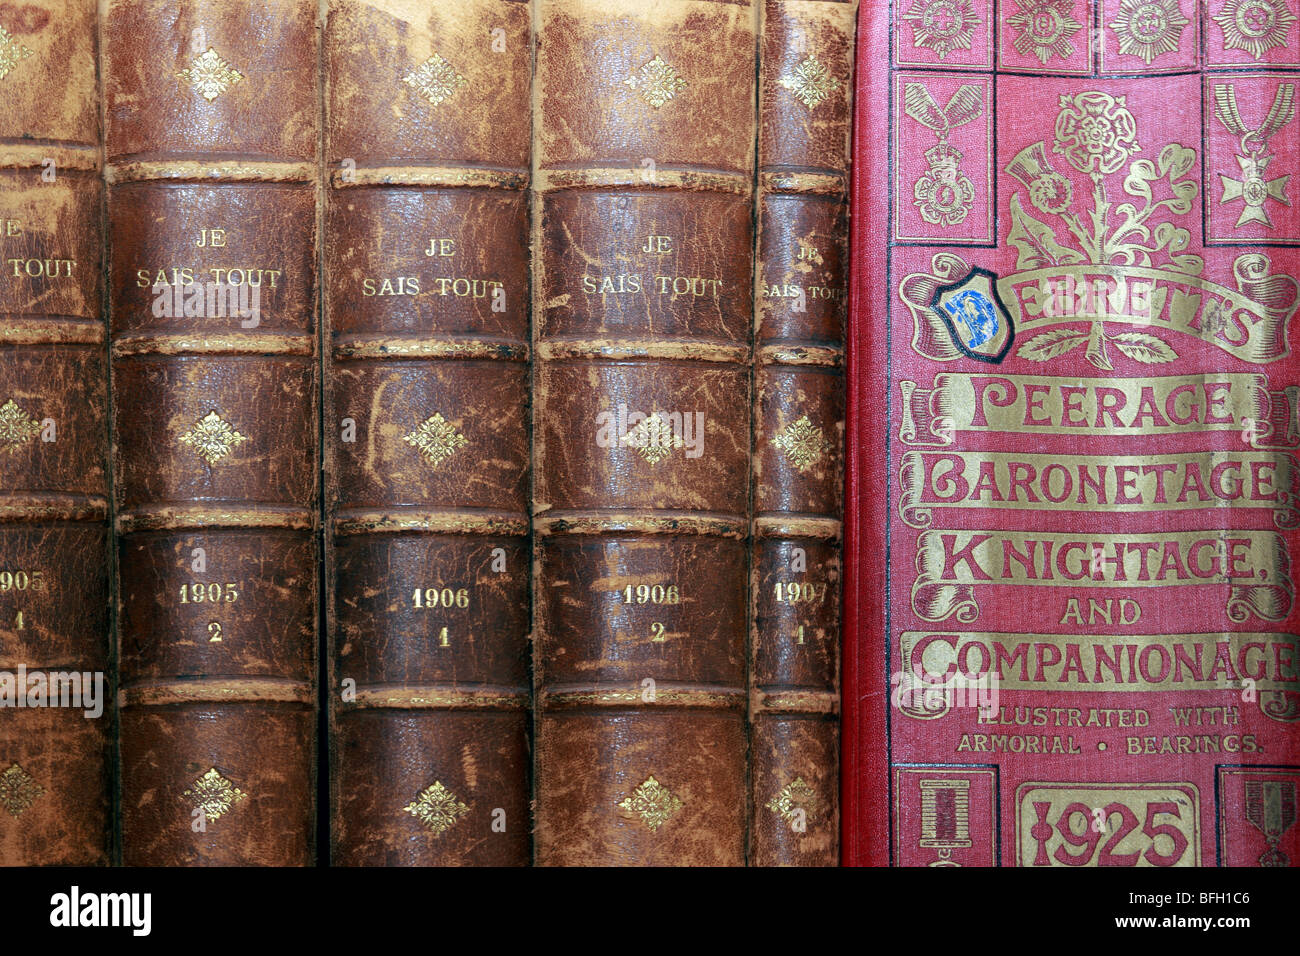 Old books including Debrett's Peerage Baronetage Knightage 1925 on a book shelf Stock Photo